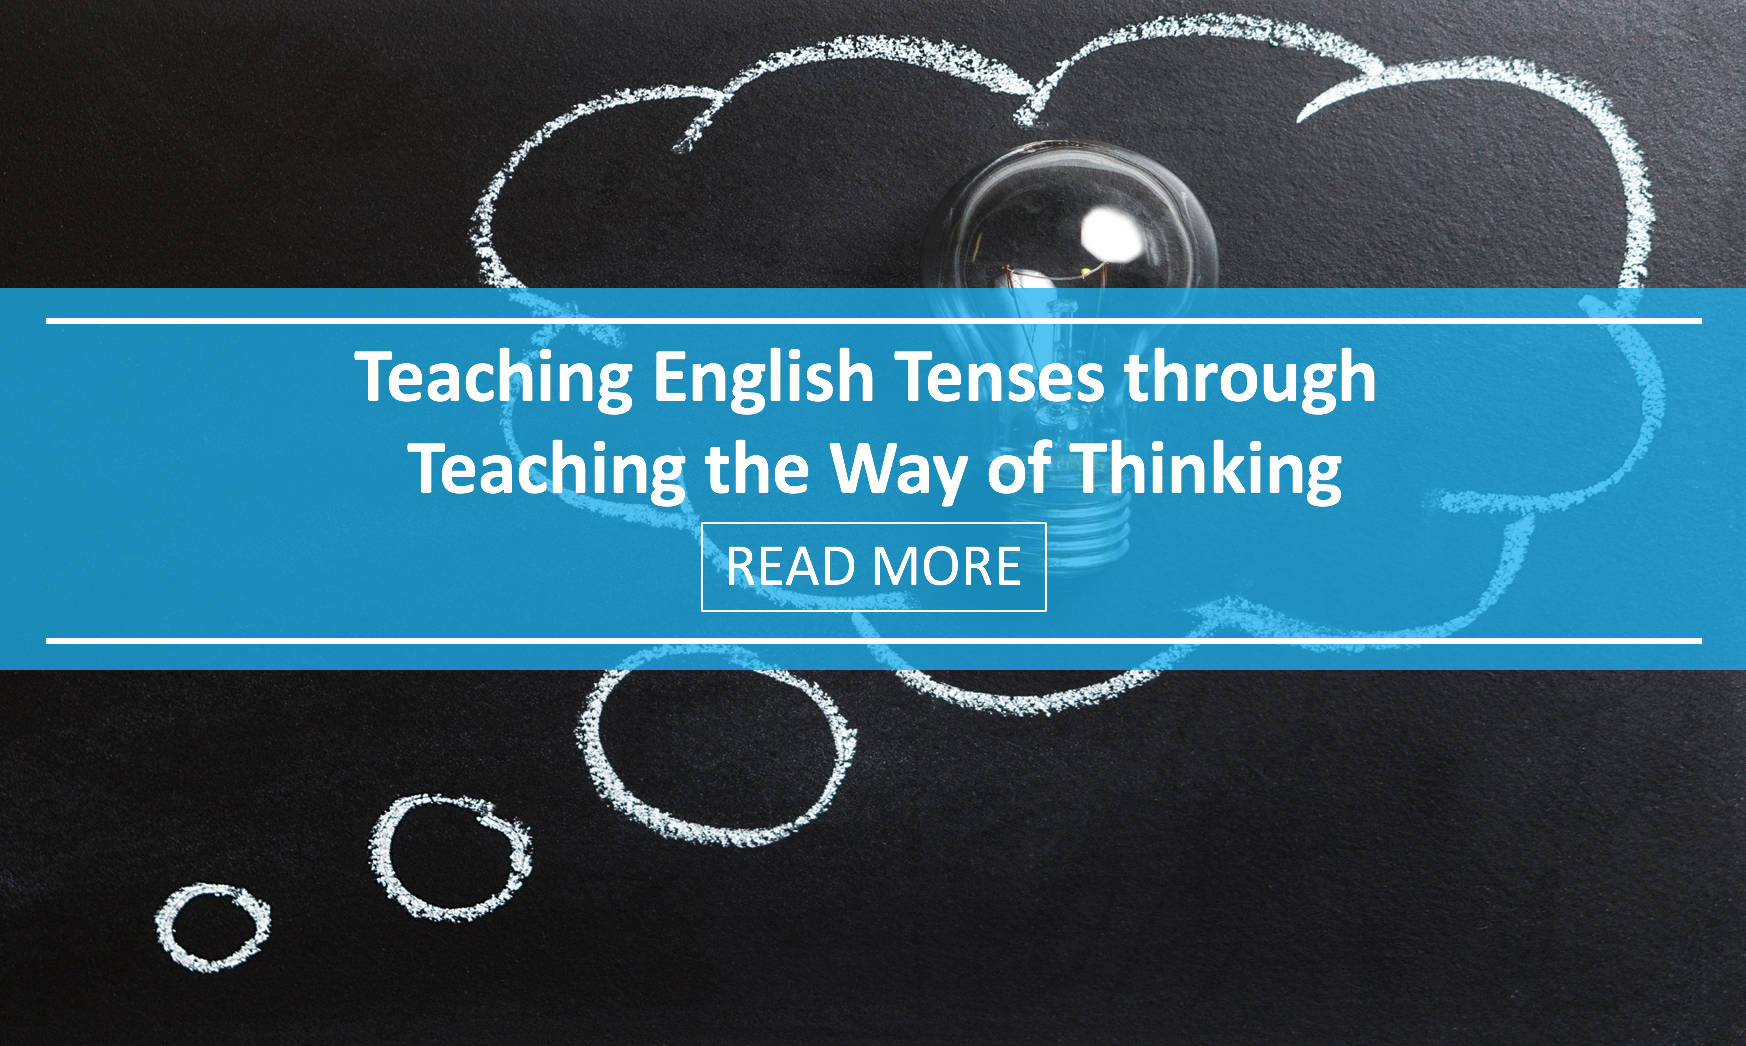 Teaching English Tenses through Teaching the Way of Thinking